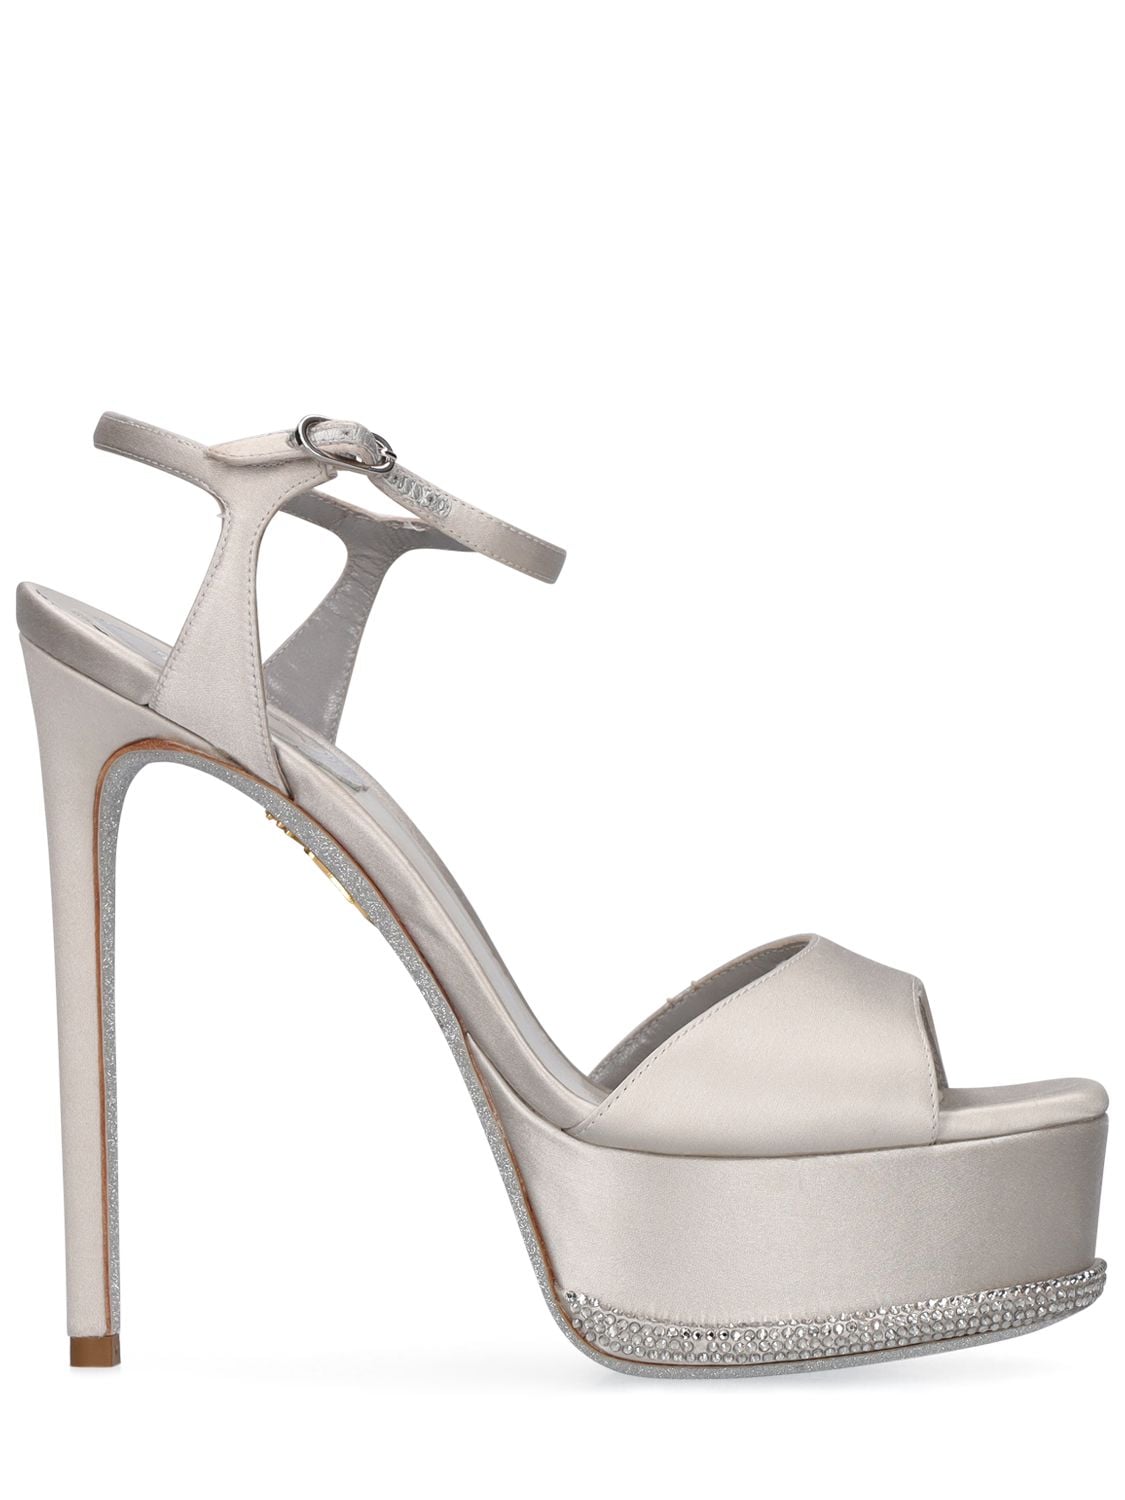 René Caovilla 130mm Satin High Heel Sandals In Silver